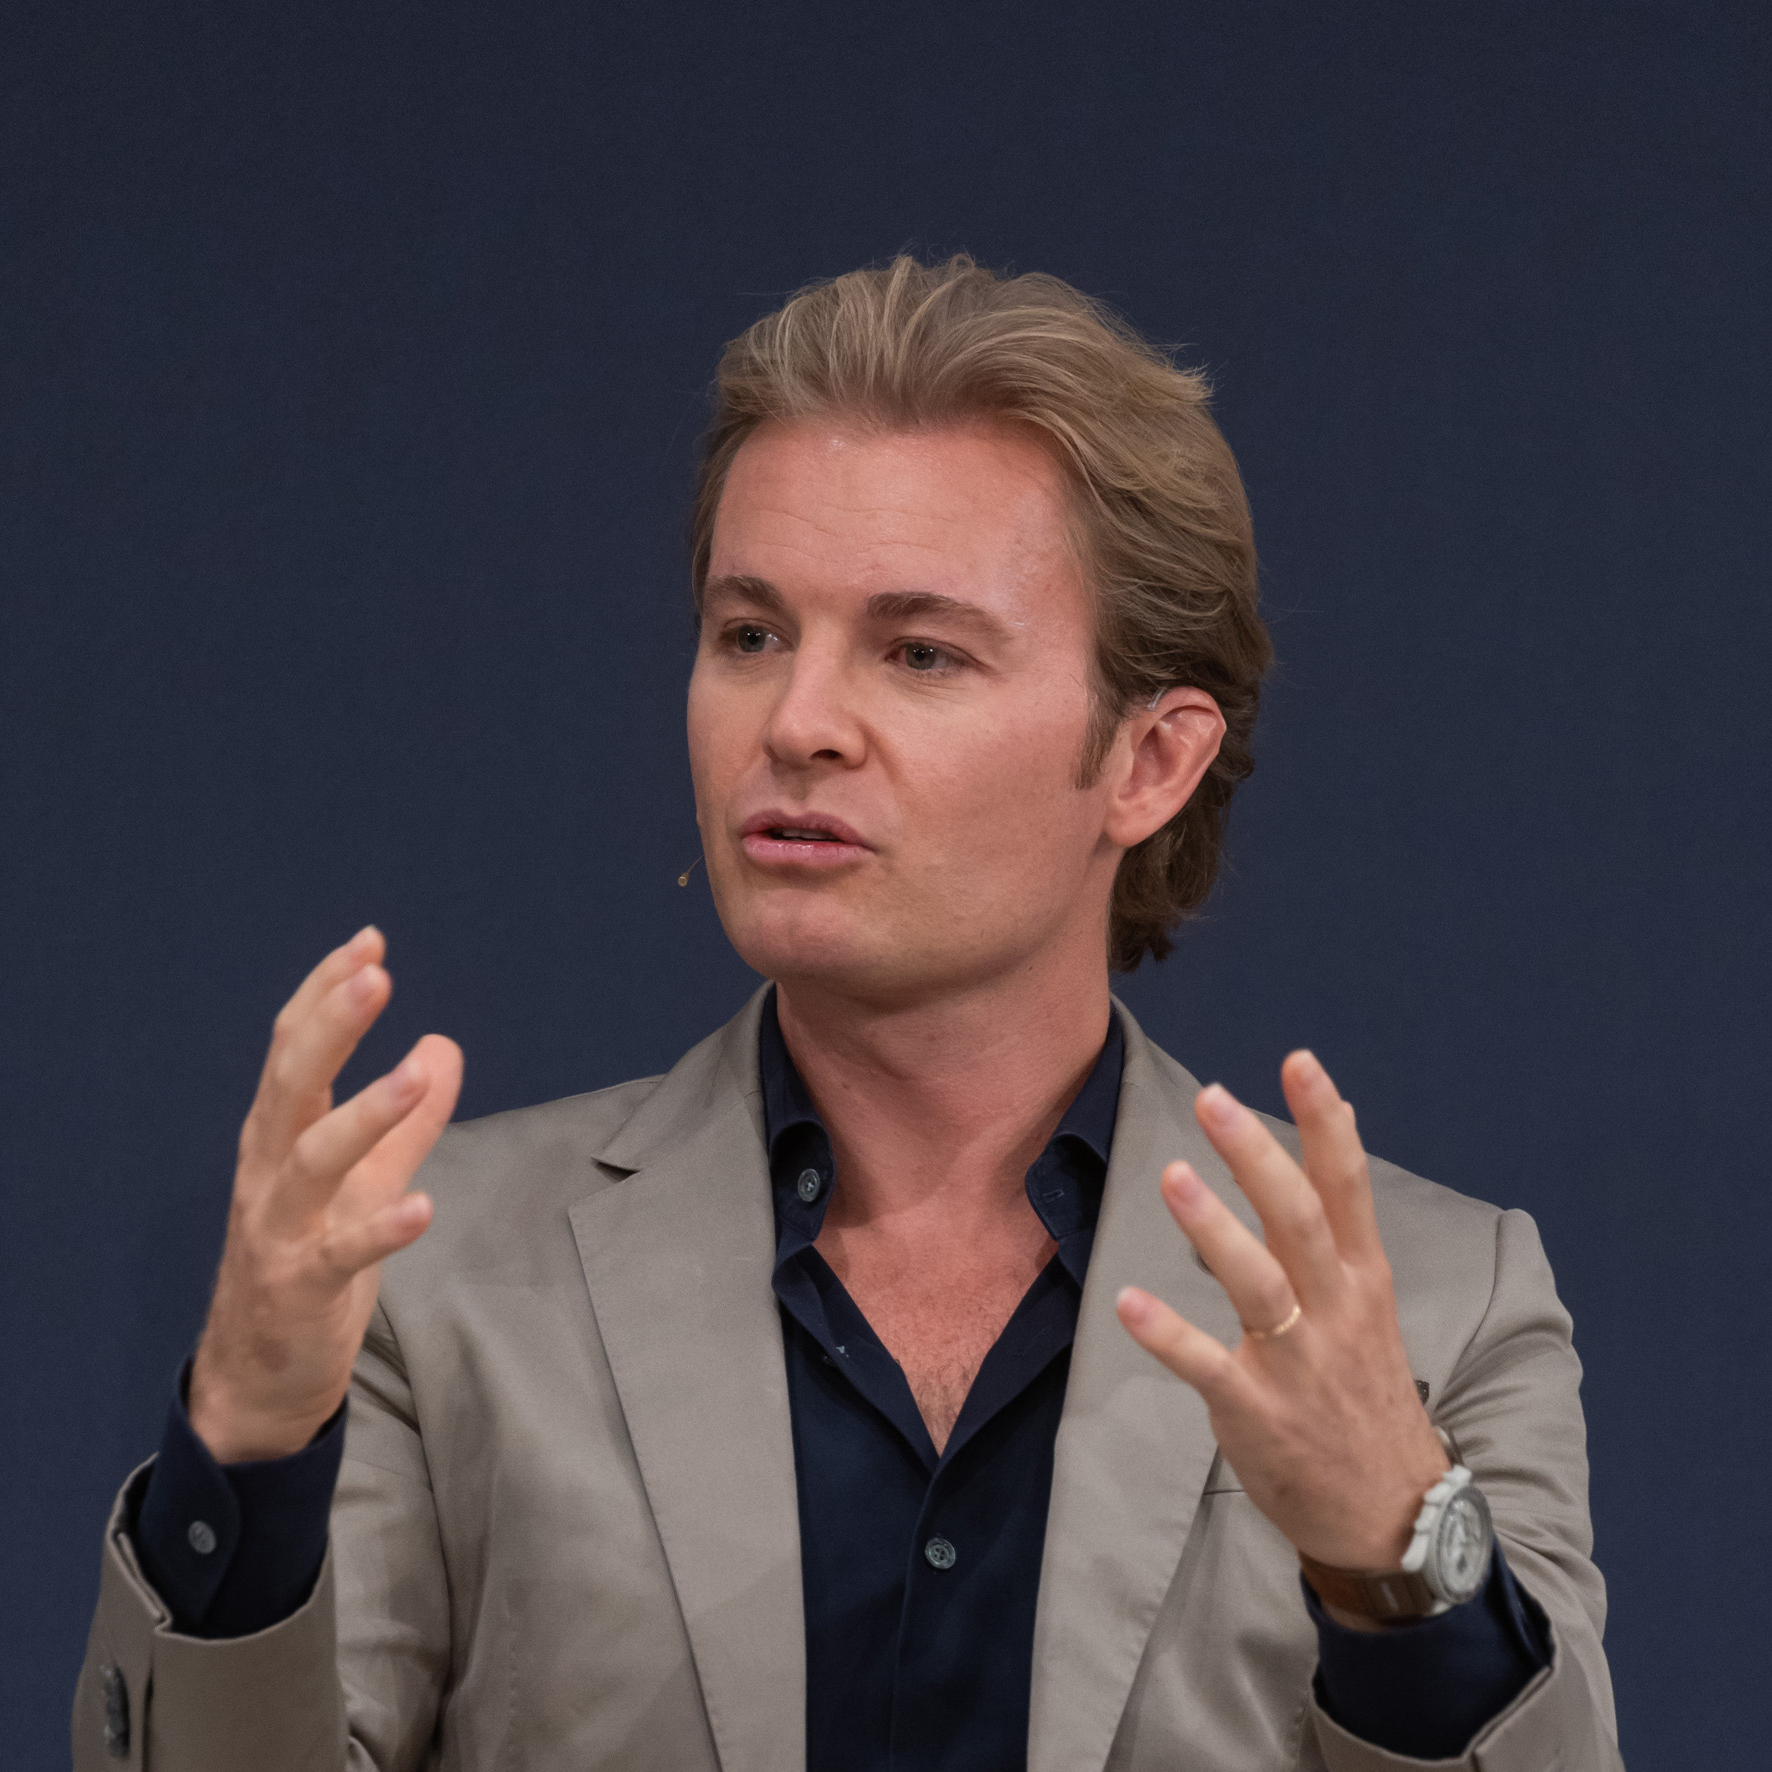 Nico Rosberg, Sustainability Entrepreneur, 